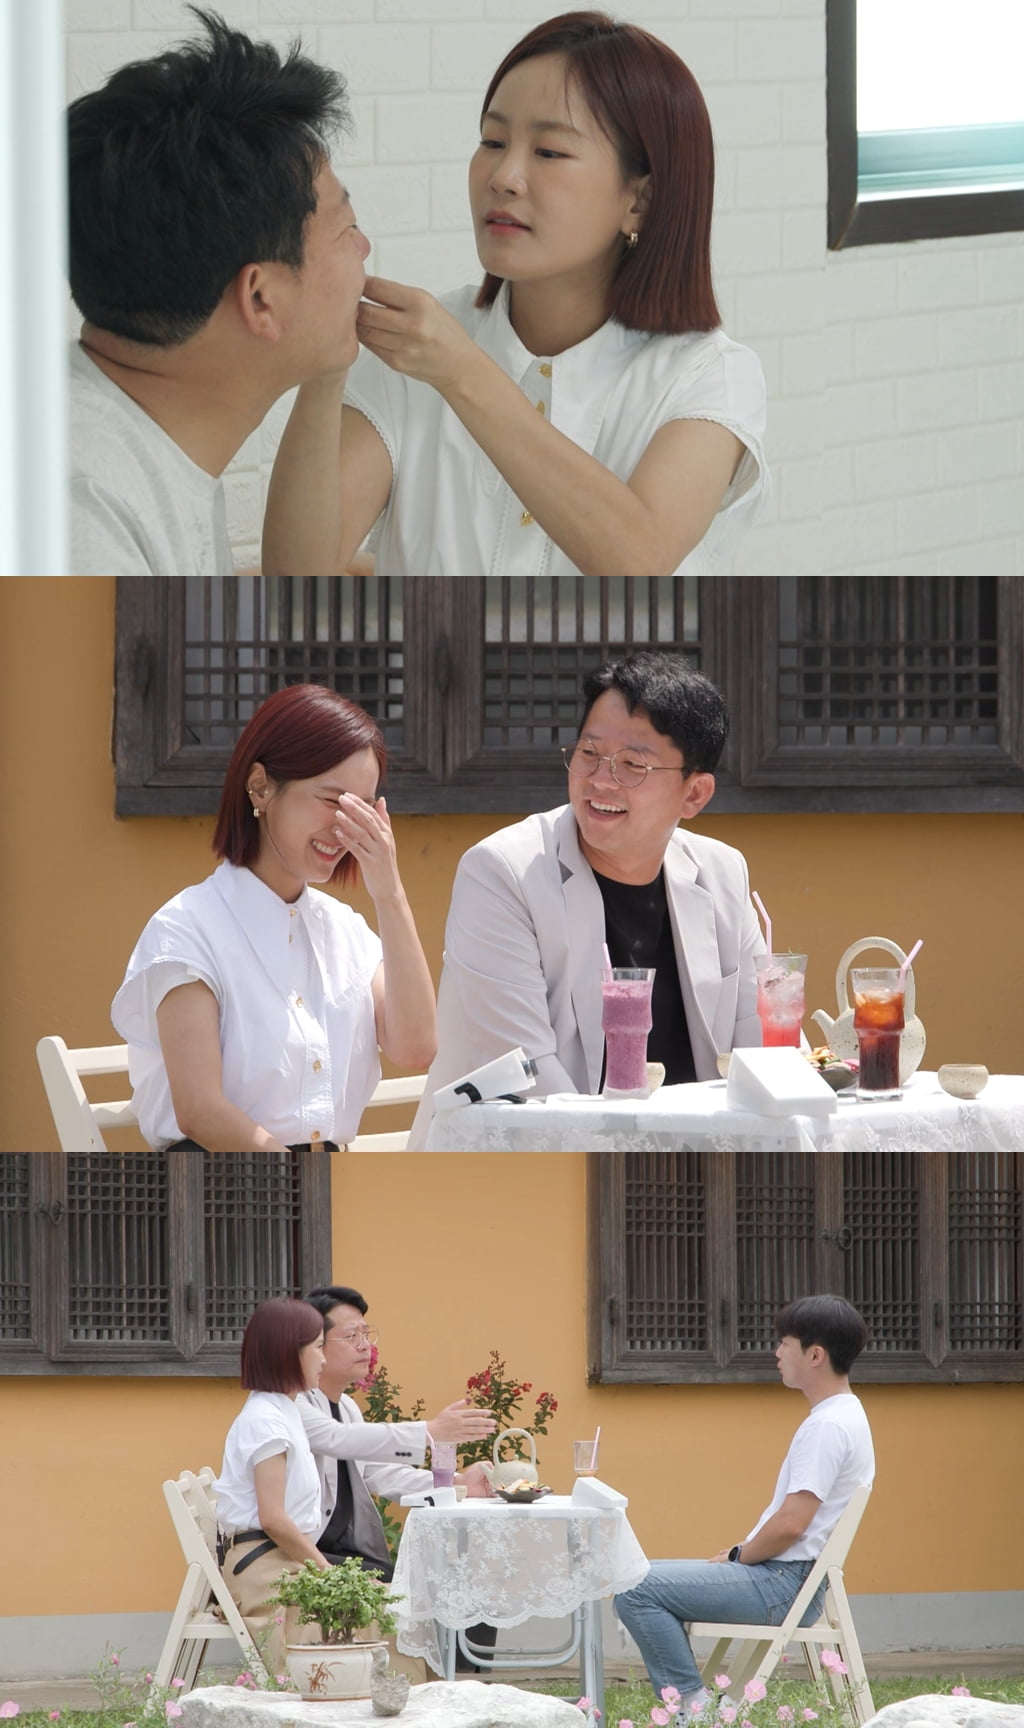 Kim Jun-ho meets his future mother-in-law